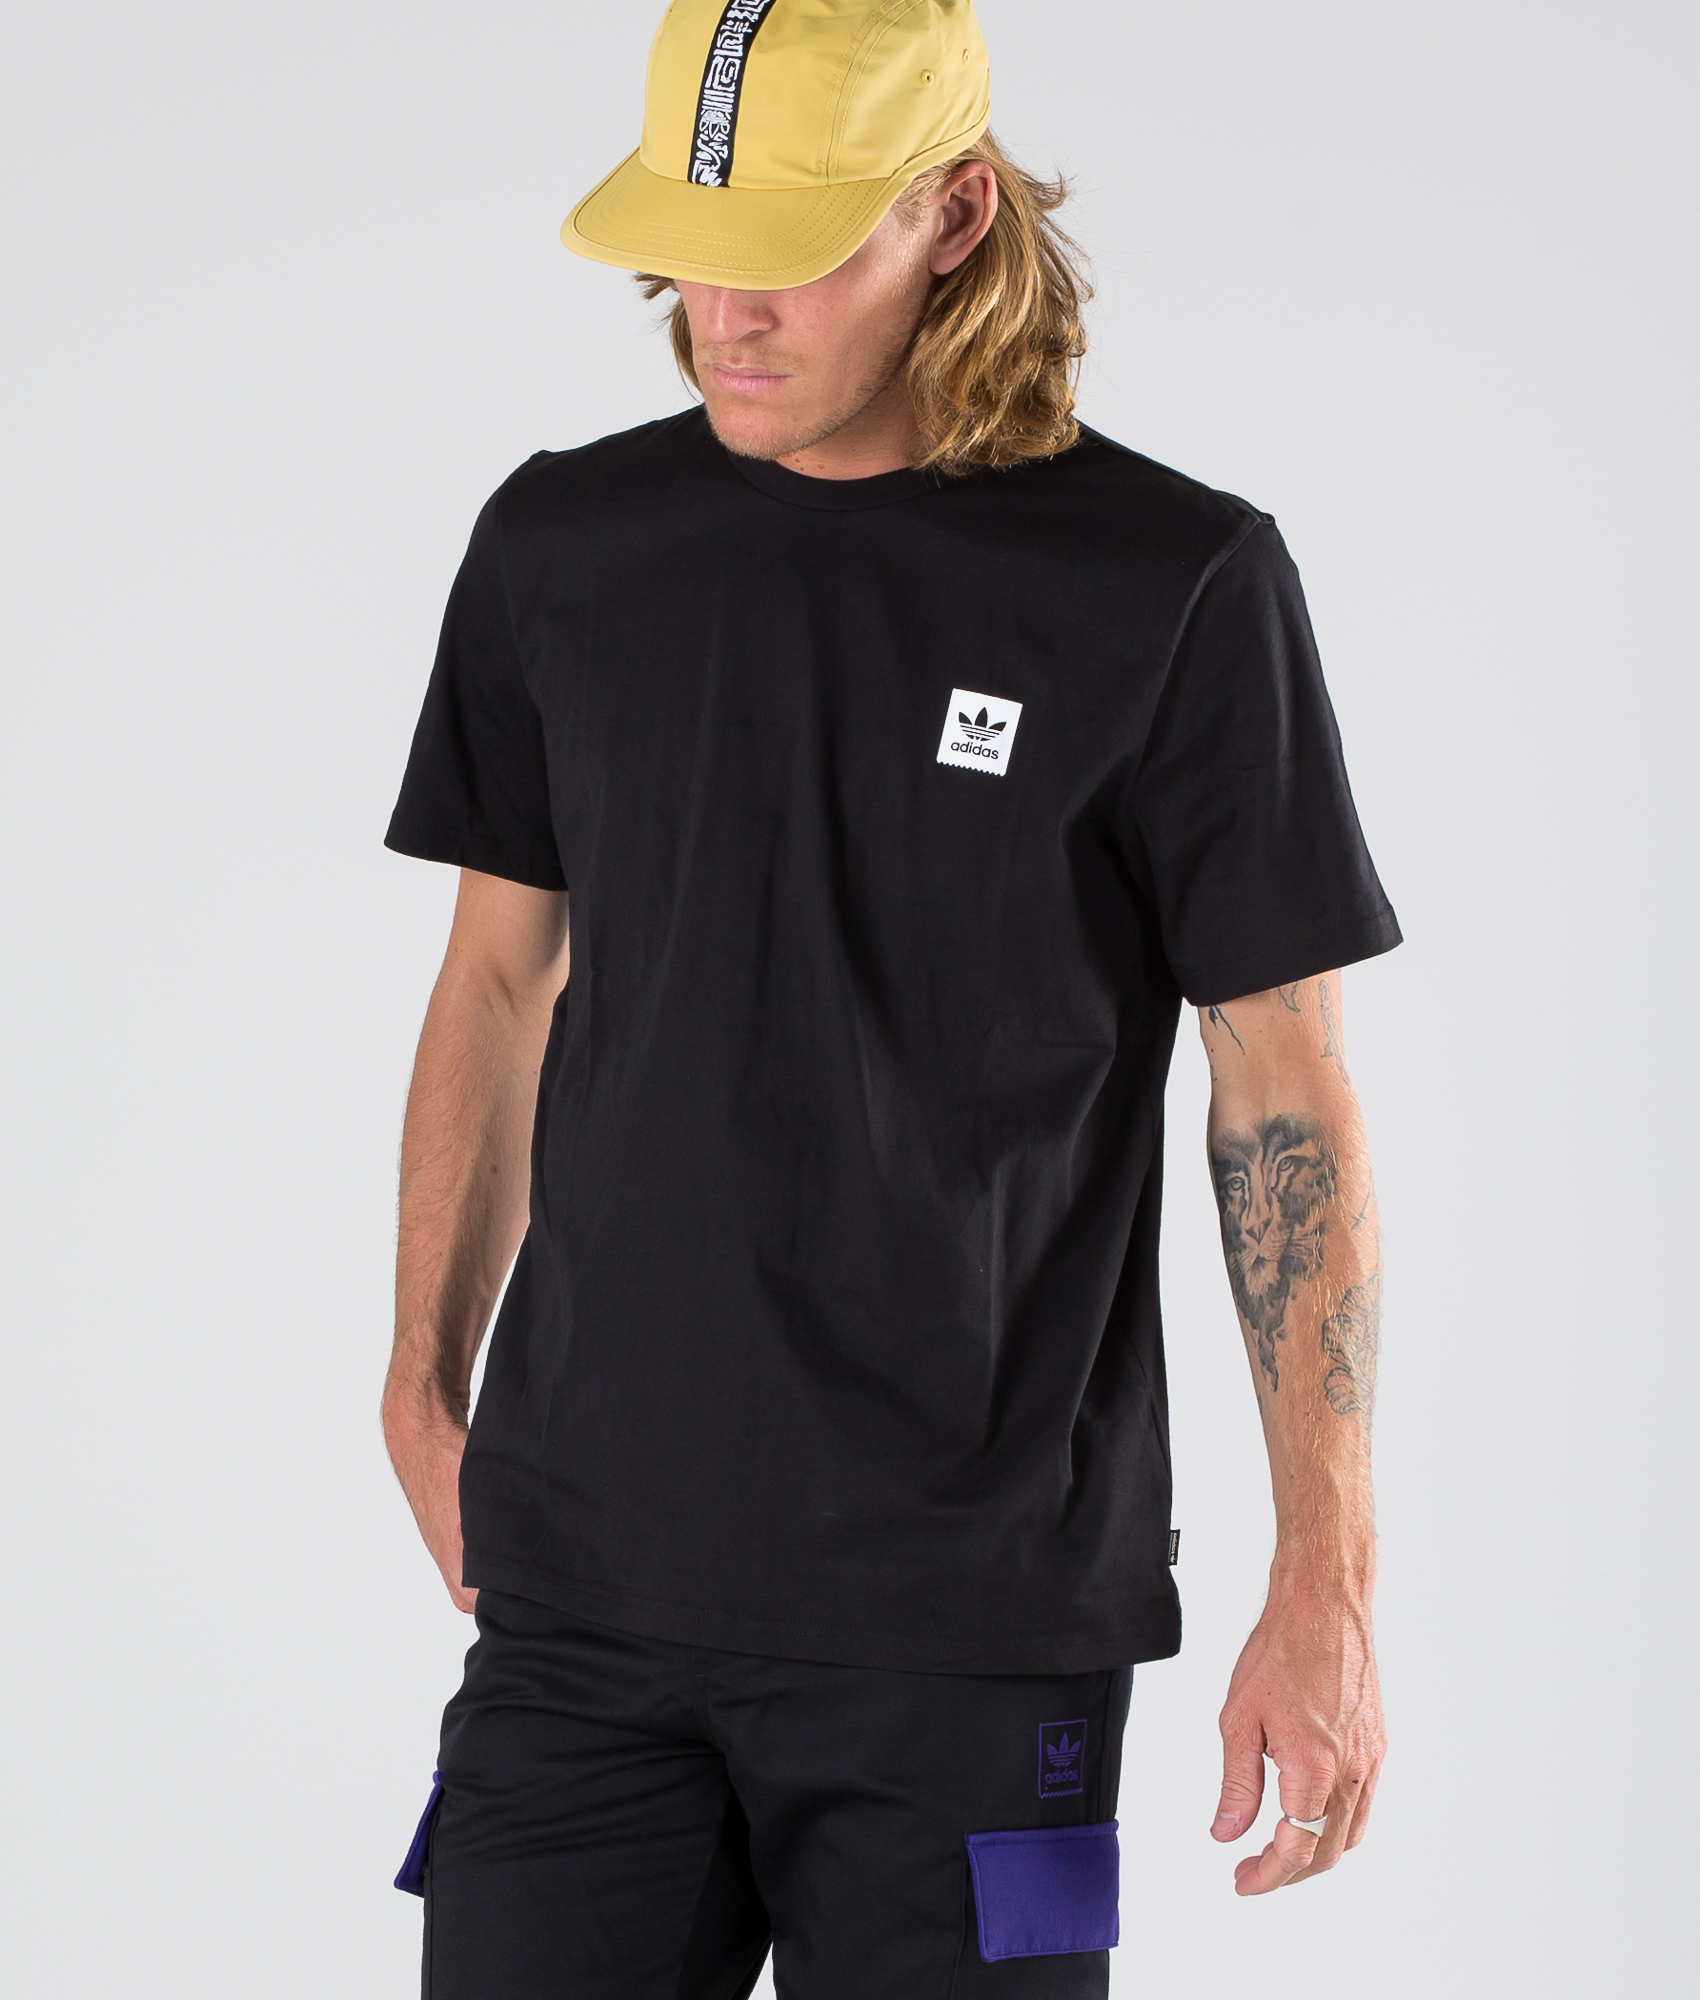 Egern Misforstå Samle AJF,adidas skateboarding shirts,nalan.com.sg